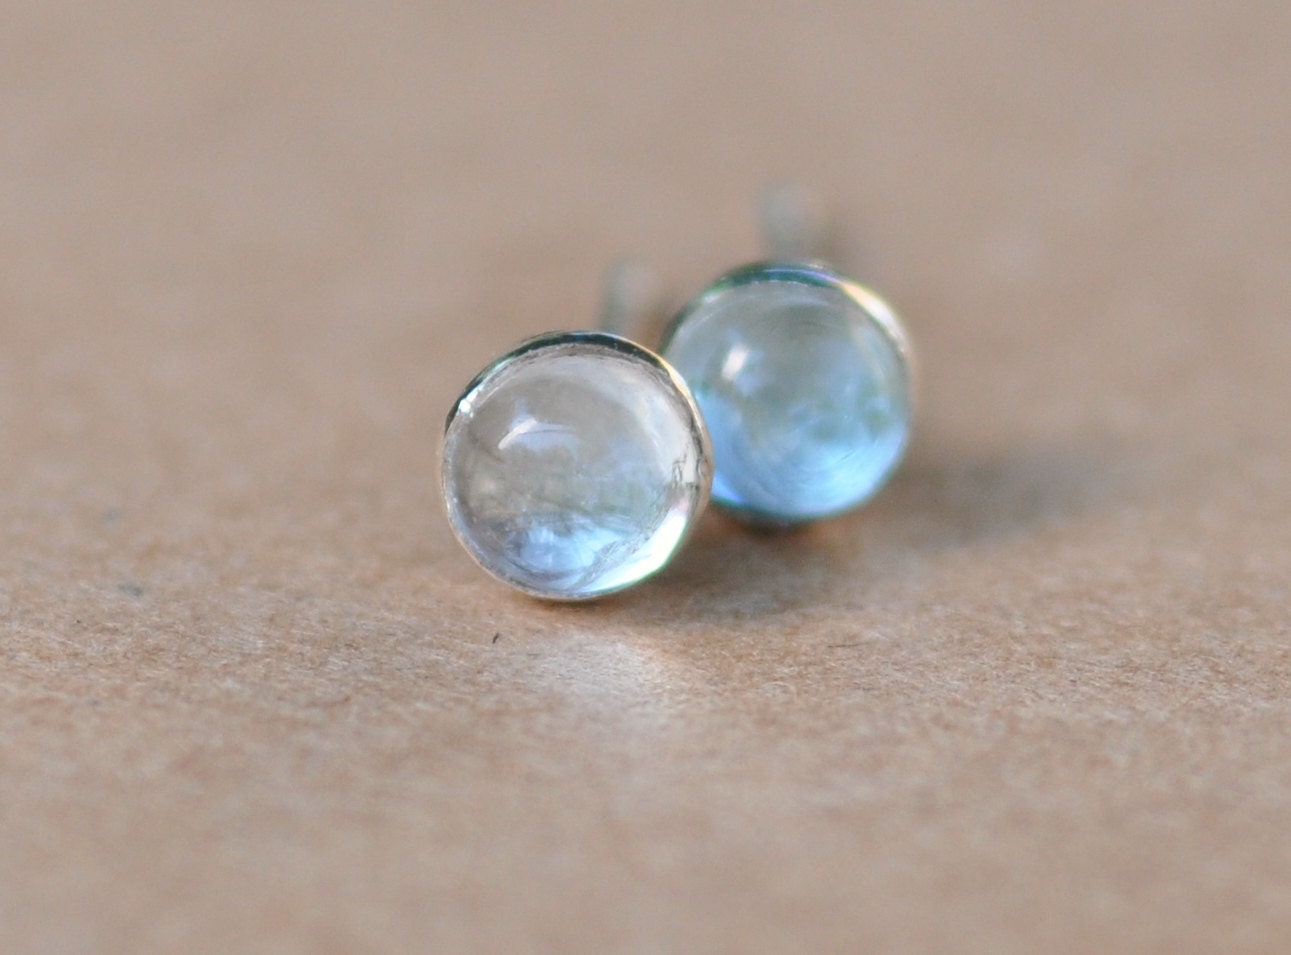 Aquamarine Earring Studs. 4mm Clear Aquamarine gemstones set